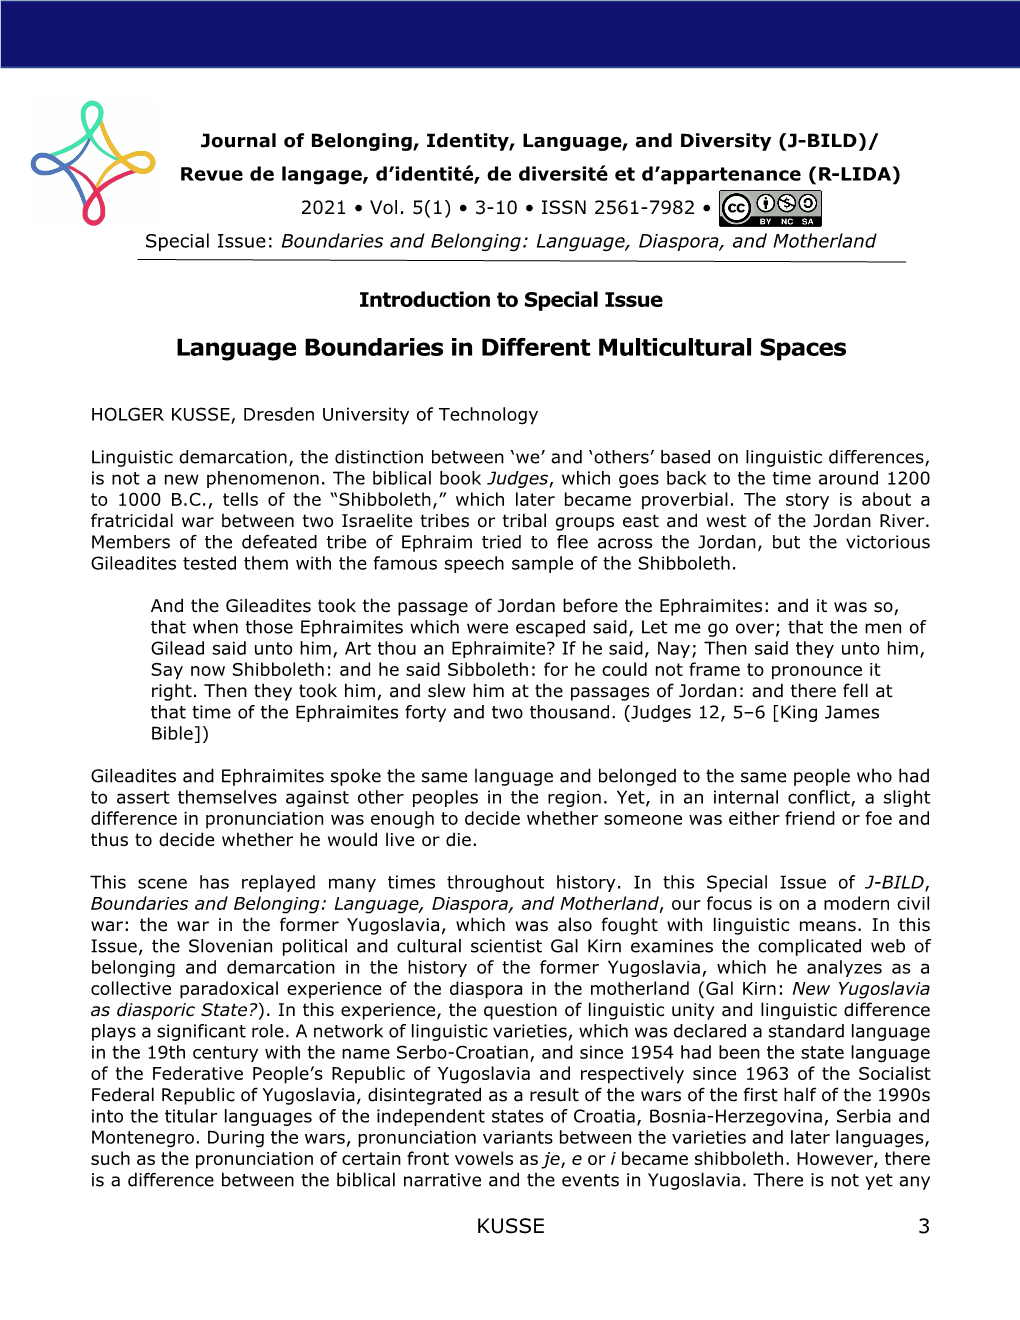 Language Boundaries in Different Multicultural Spaces